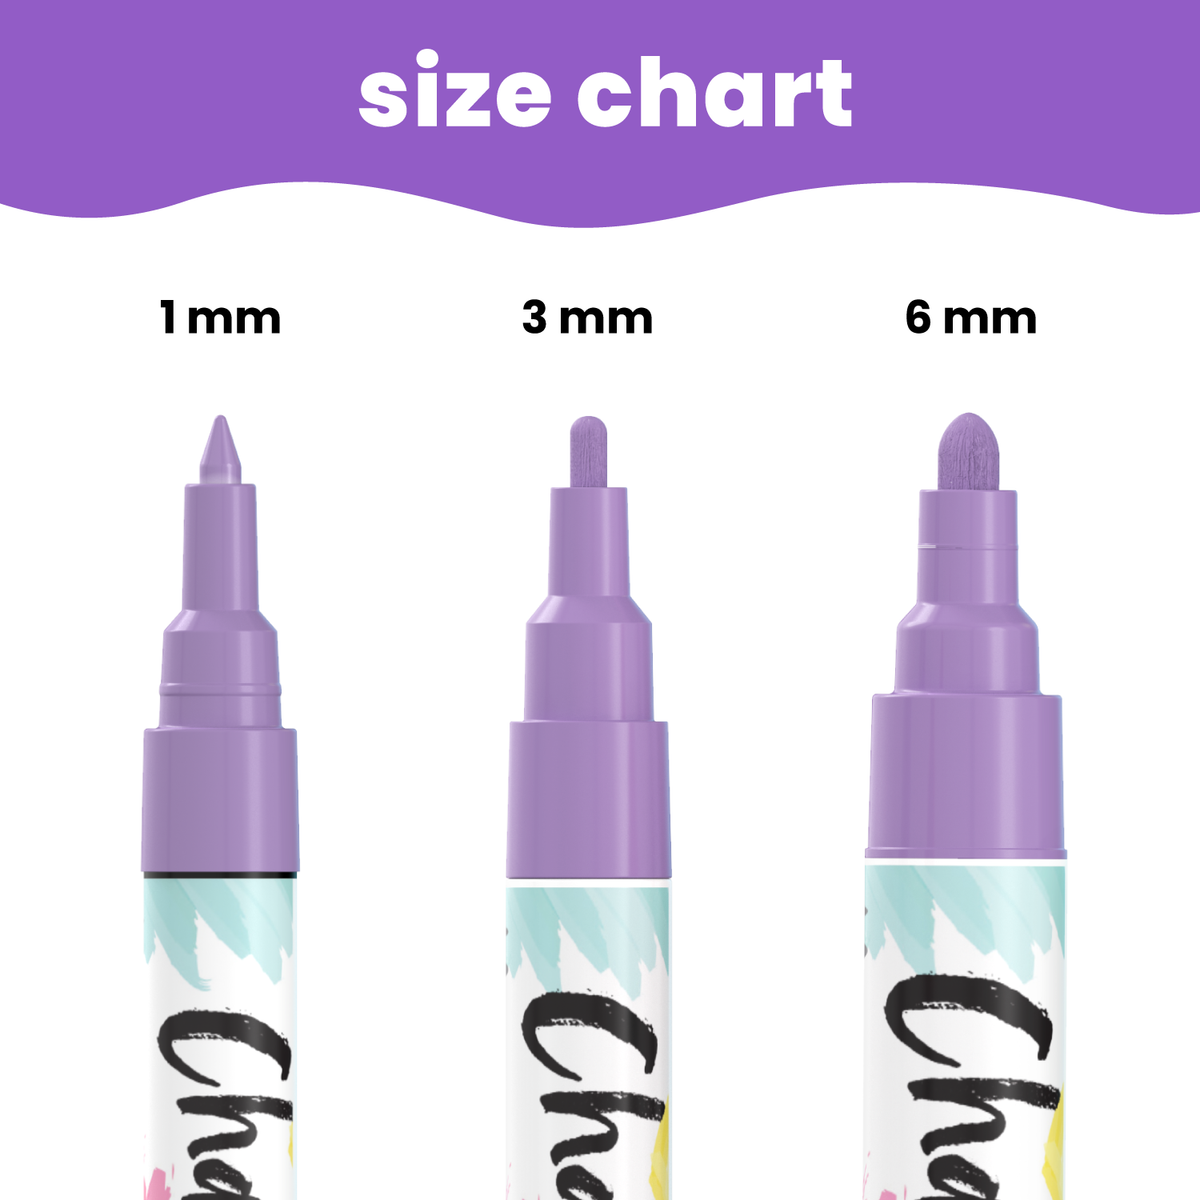 Vintage Colour Liquid Chalk Markers - Pack of 10